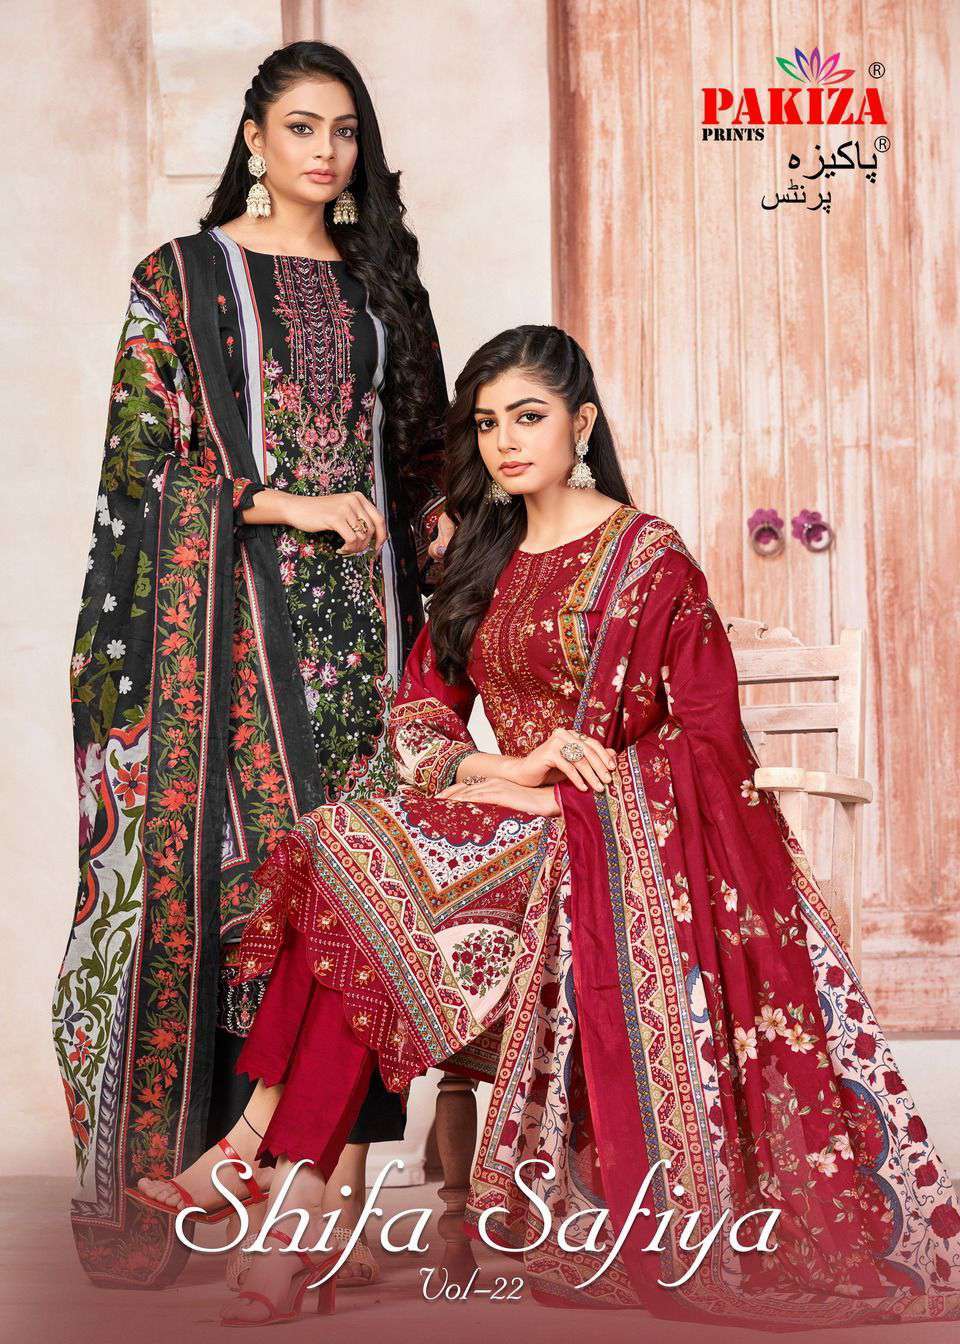 Pakiza Prints Shifa Safiya Vol 22 Pakistani Style Fancy Cotton Suit Exporter